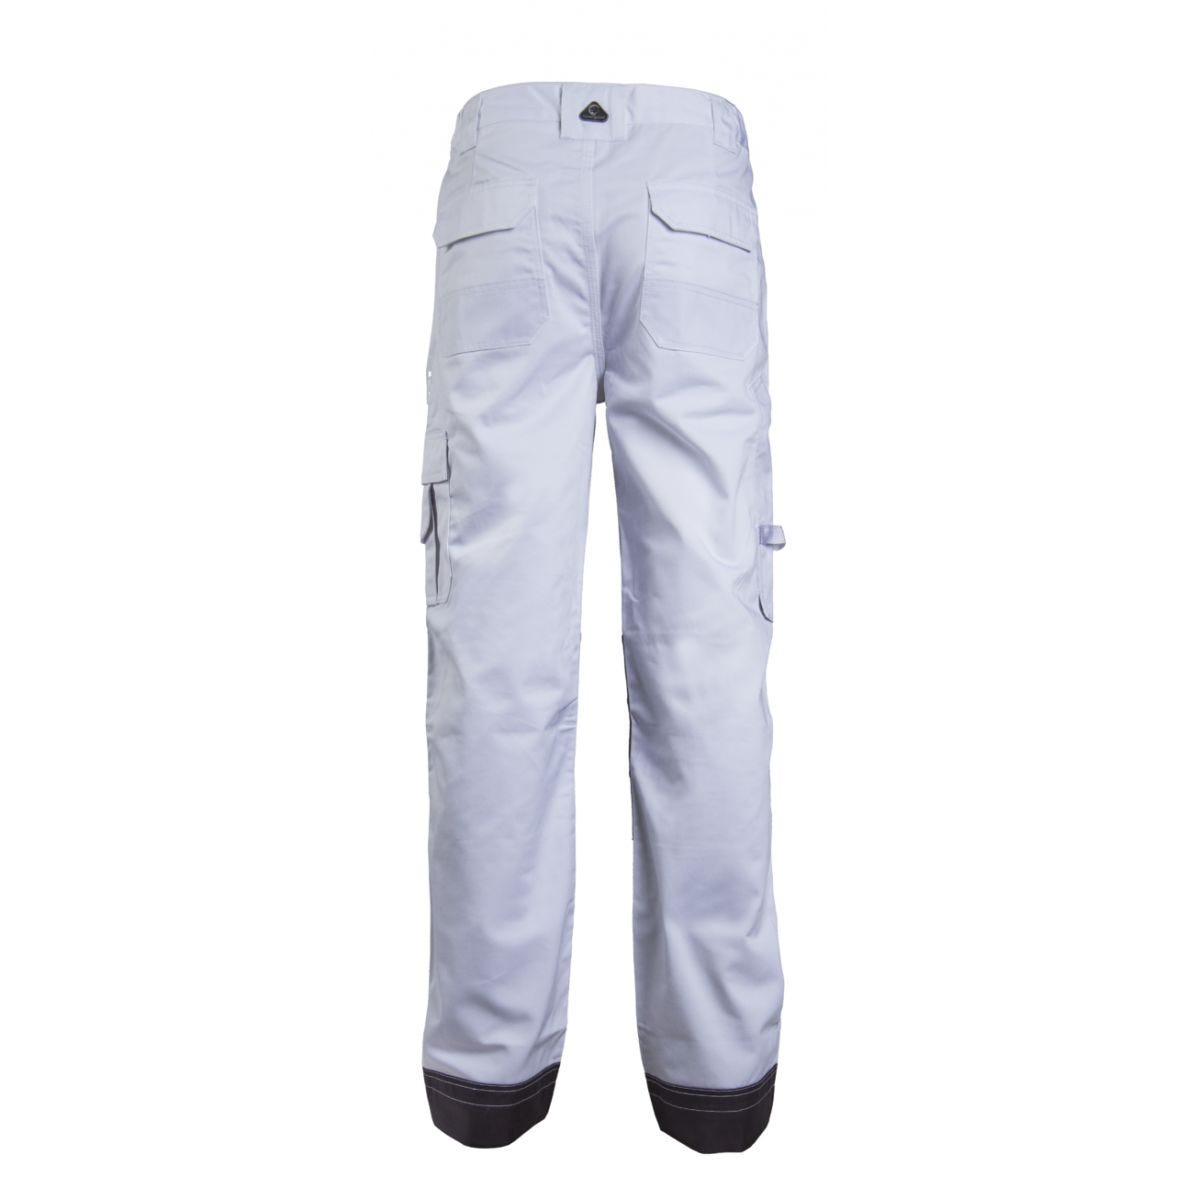 Pantalon CLASS blanc - COVERGUARD - Taille XS 1